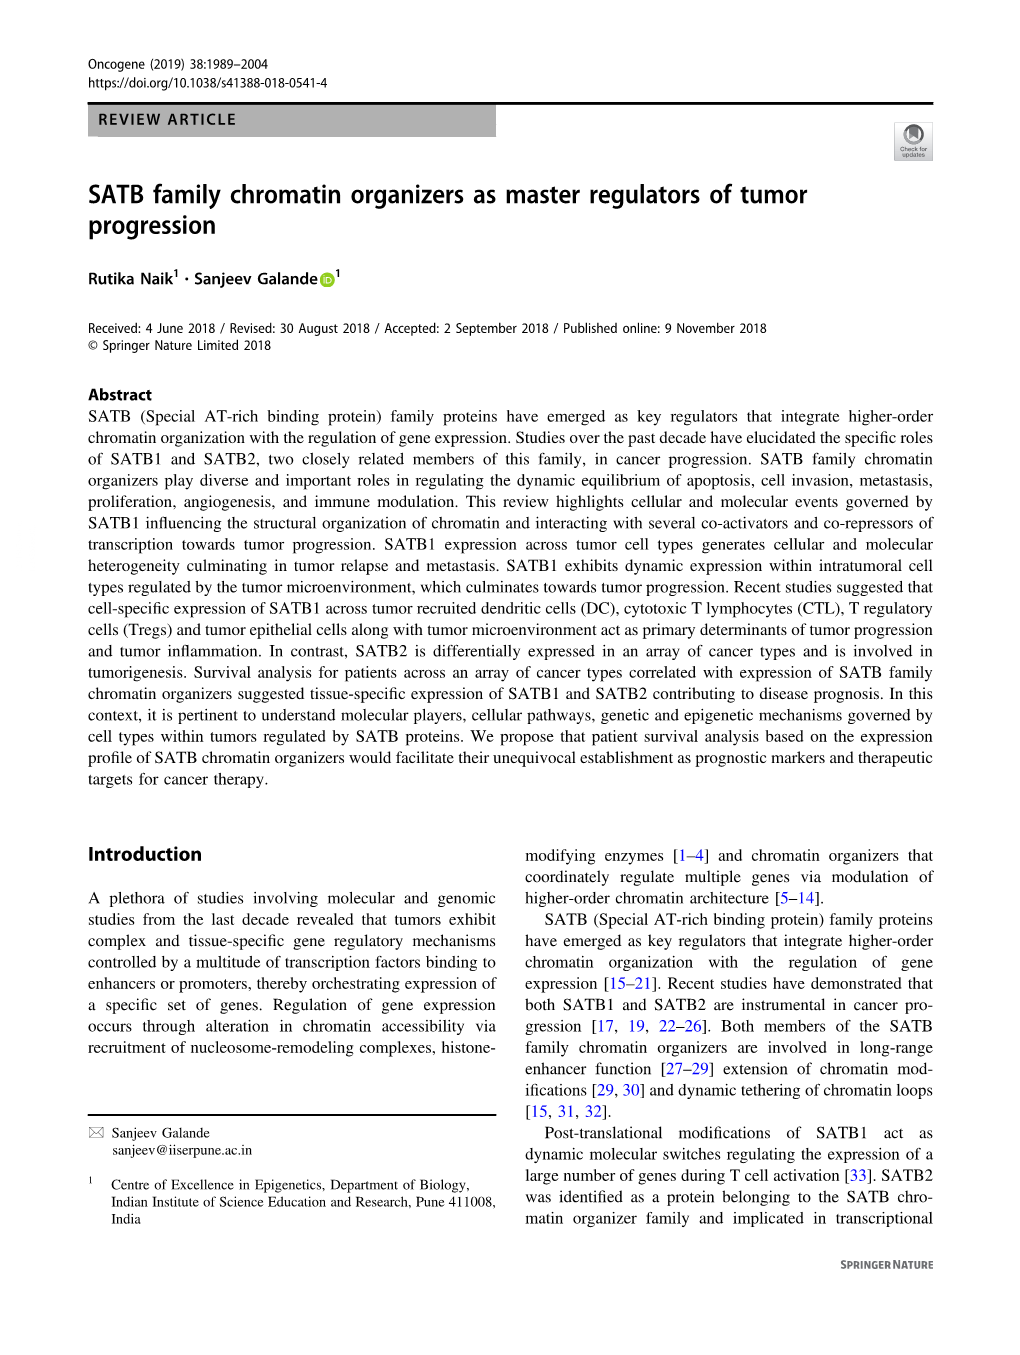 SATB Family Chromatin Organizers As Master Regulators of Tumor Progression